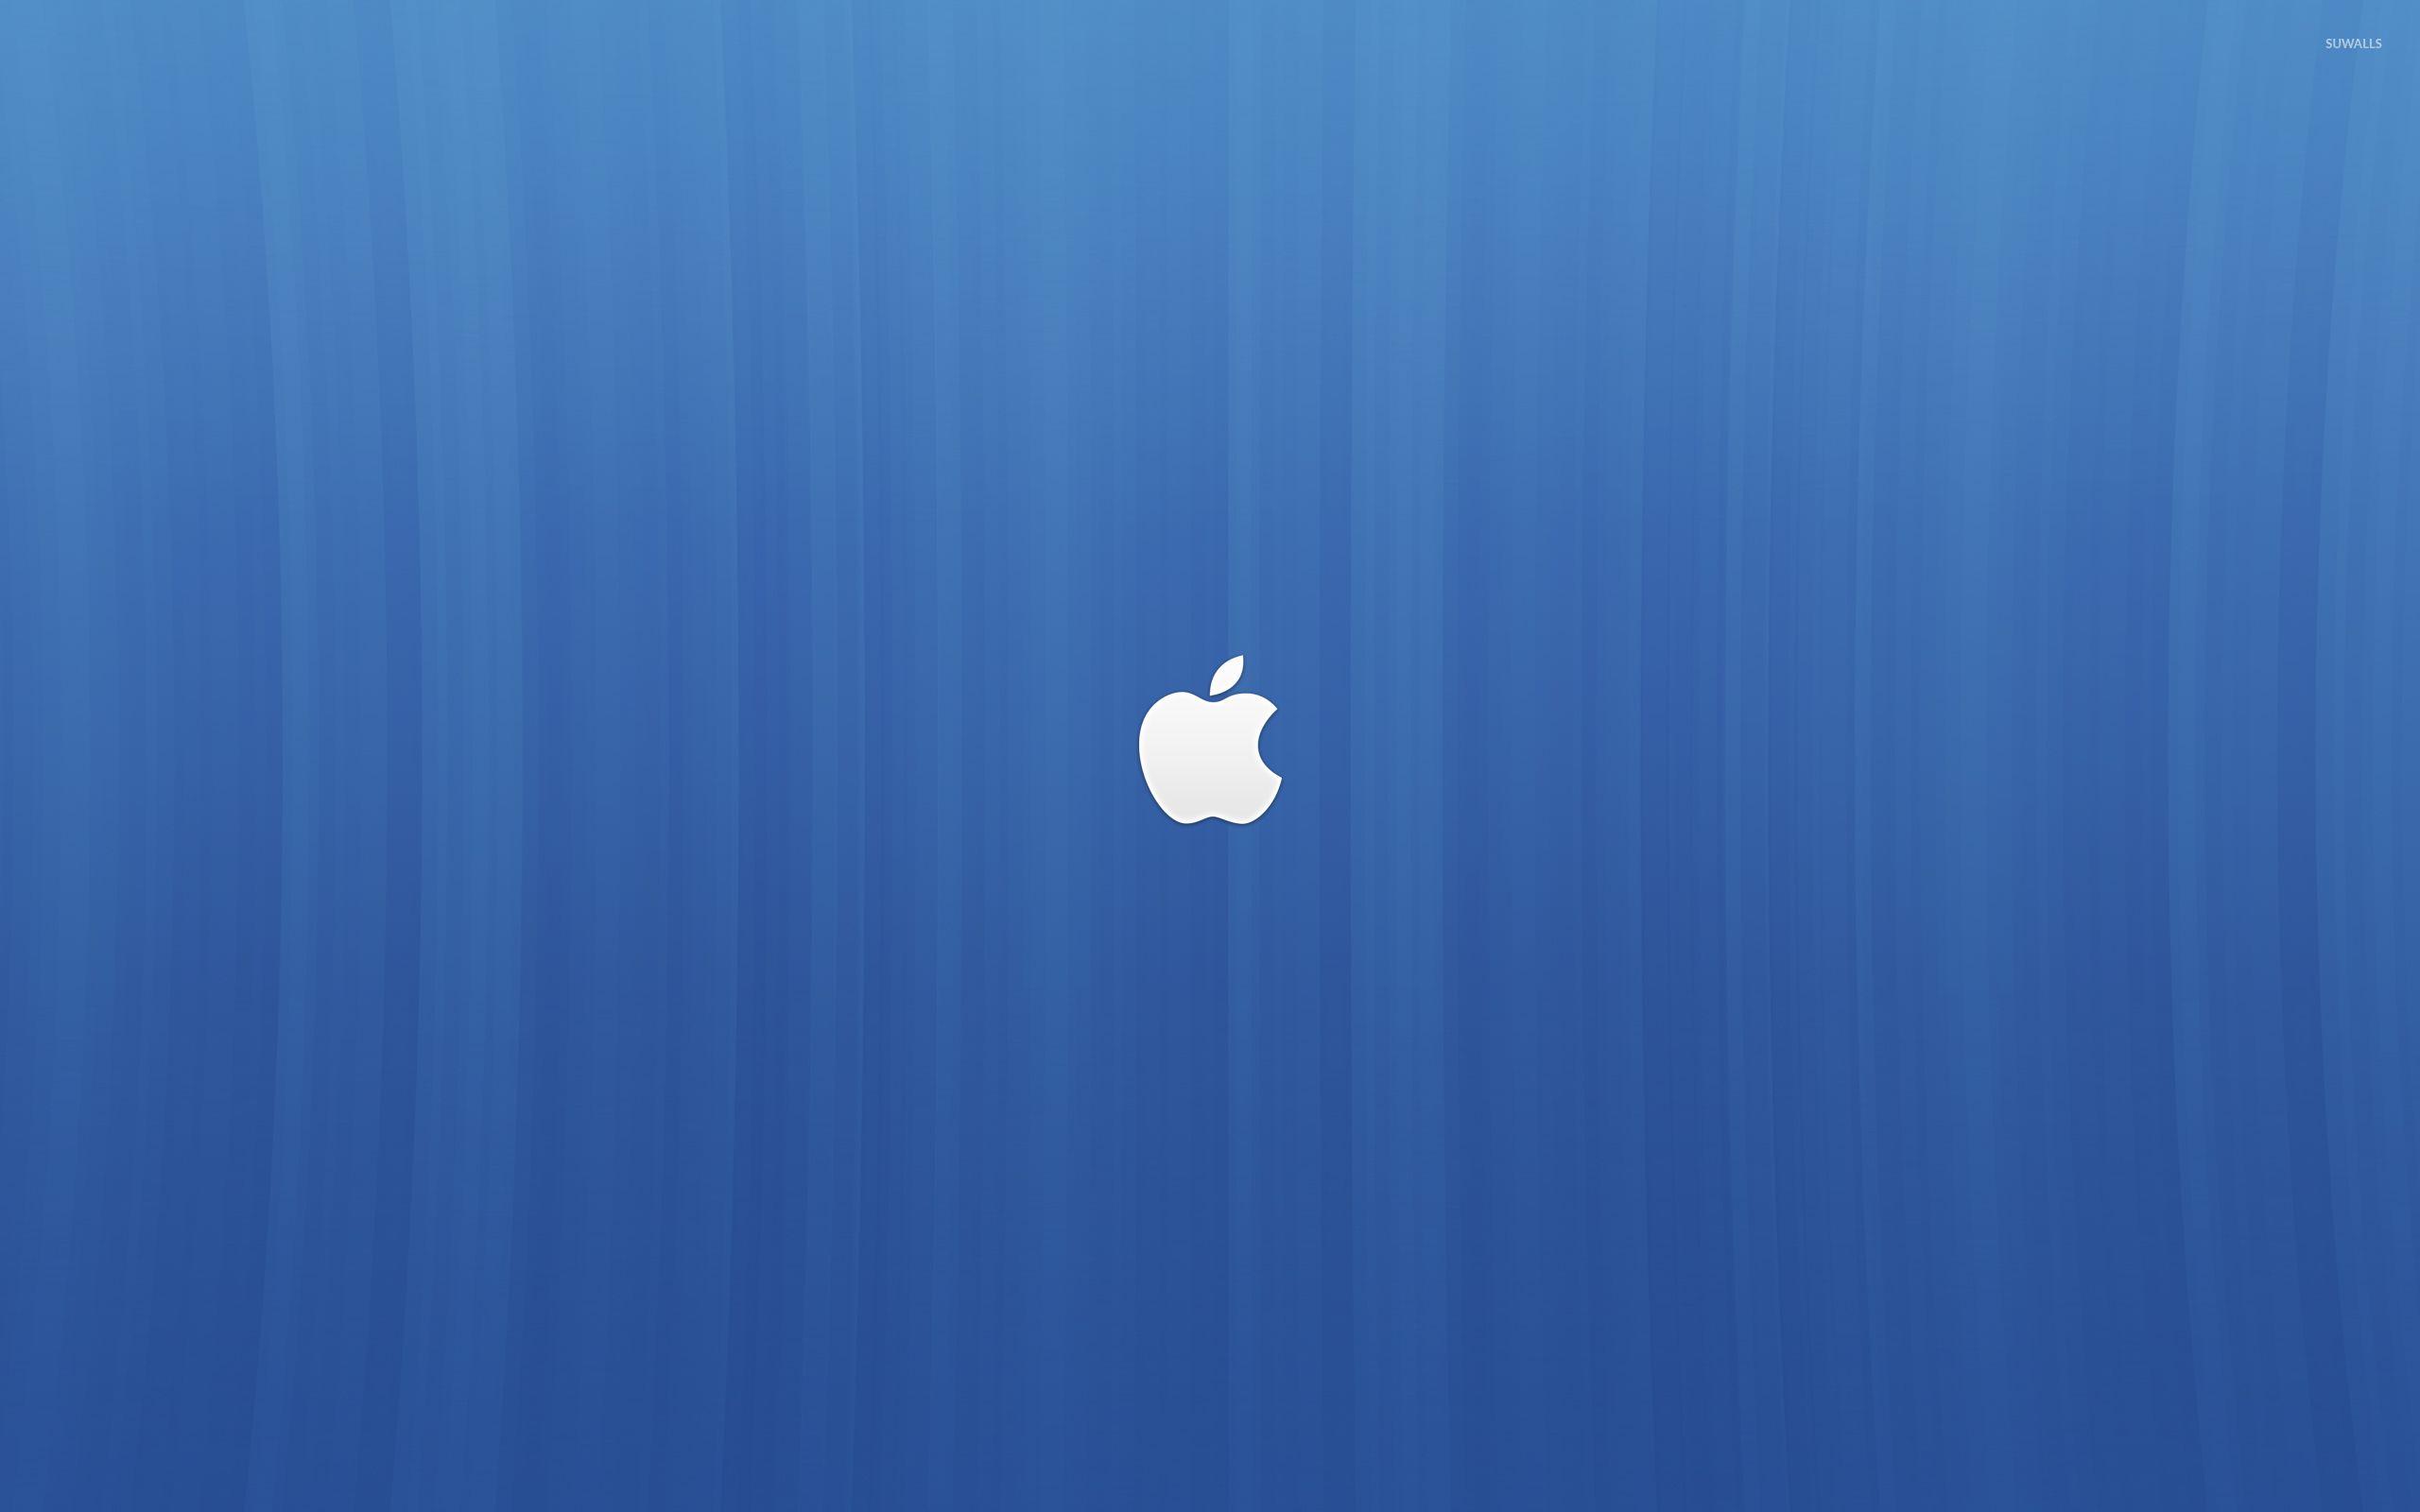 Blueand White Apple Logo - White Apple logo on blue lines wallpaper - Computer wallpapers - #54107